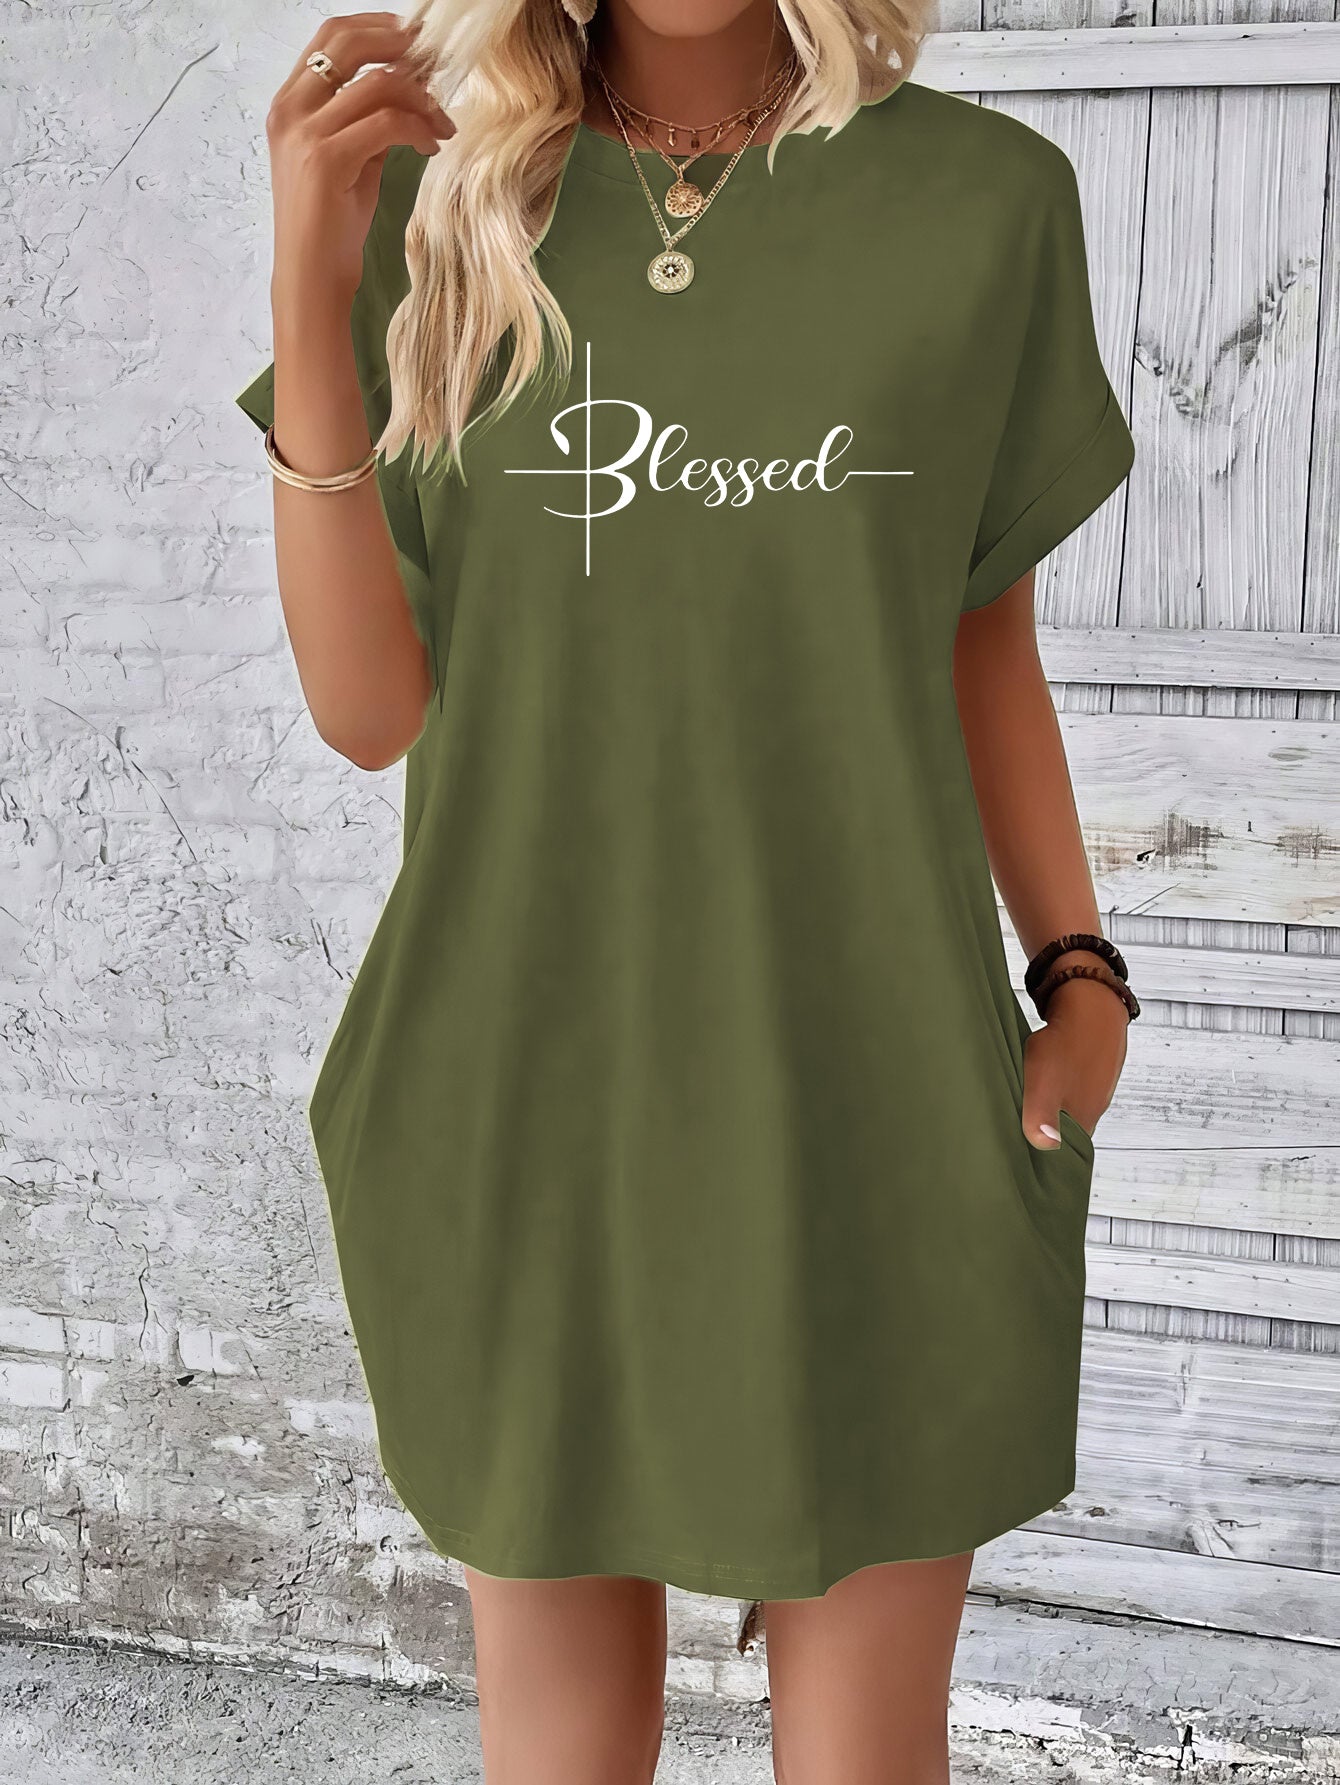 Blessed Women's Christian T-shirt Casual Dress claimedbygoddesigns